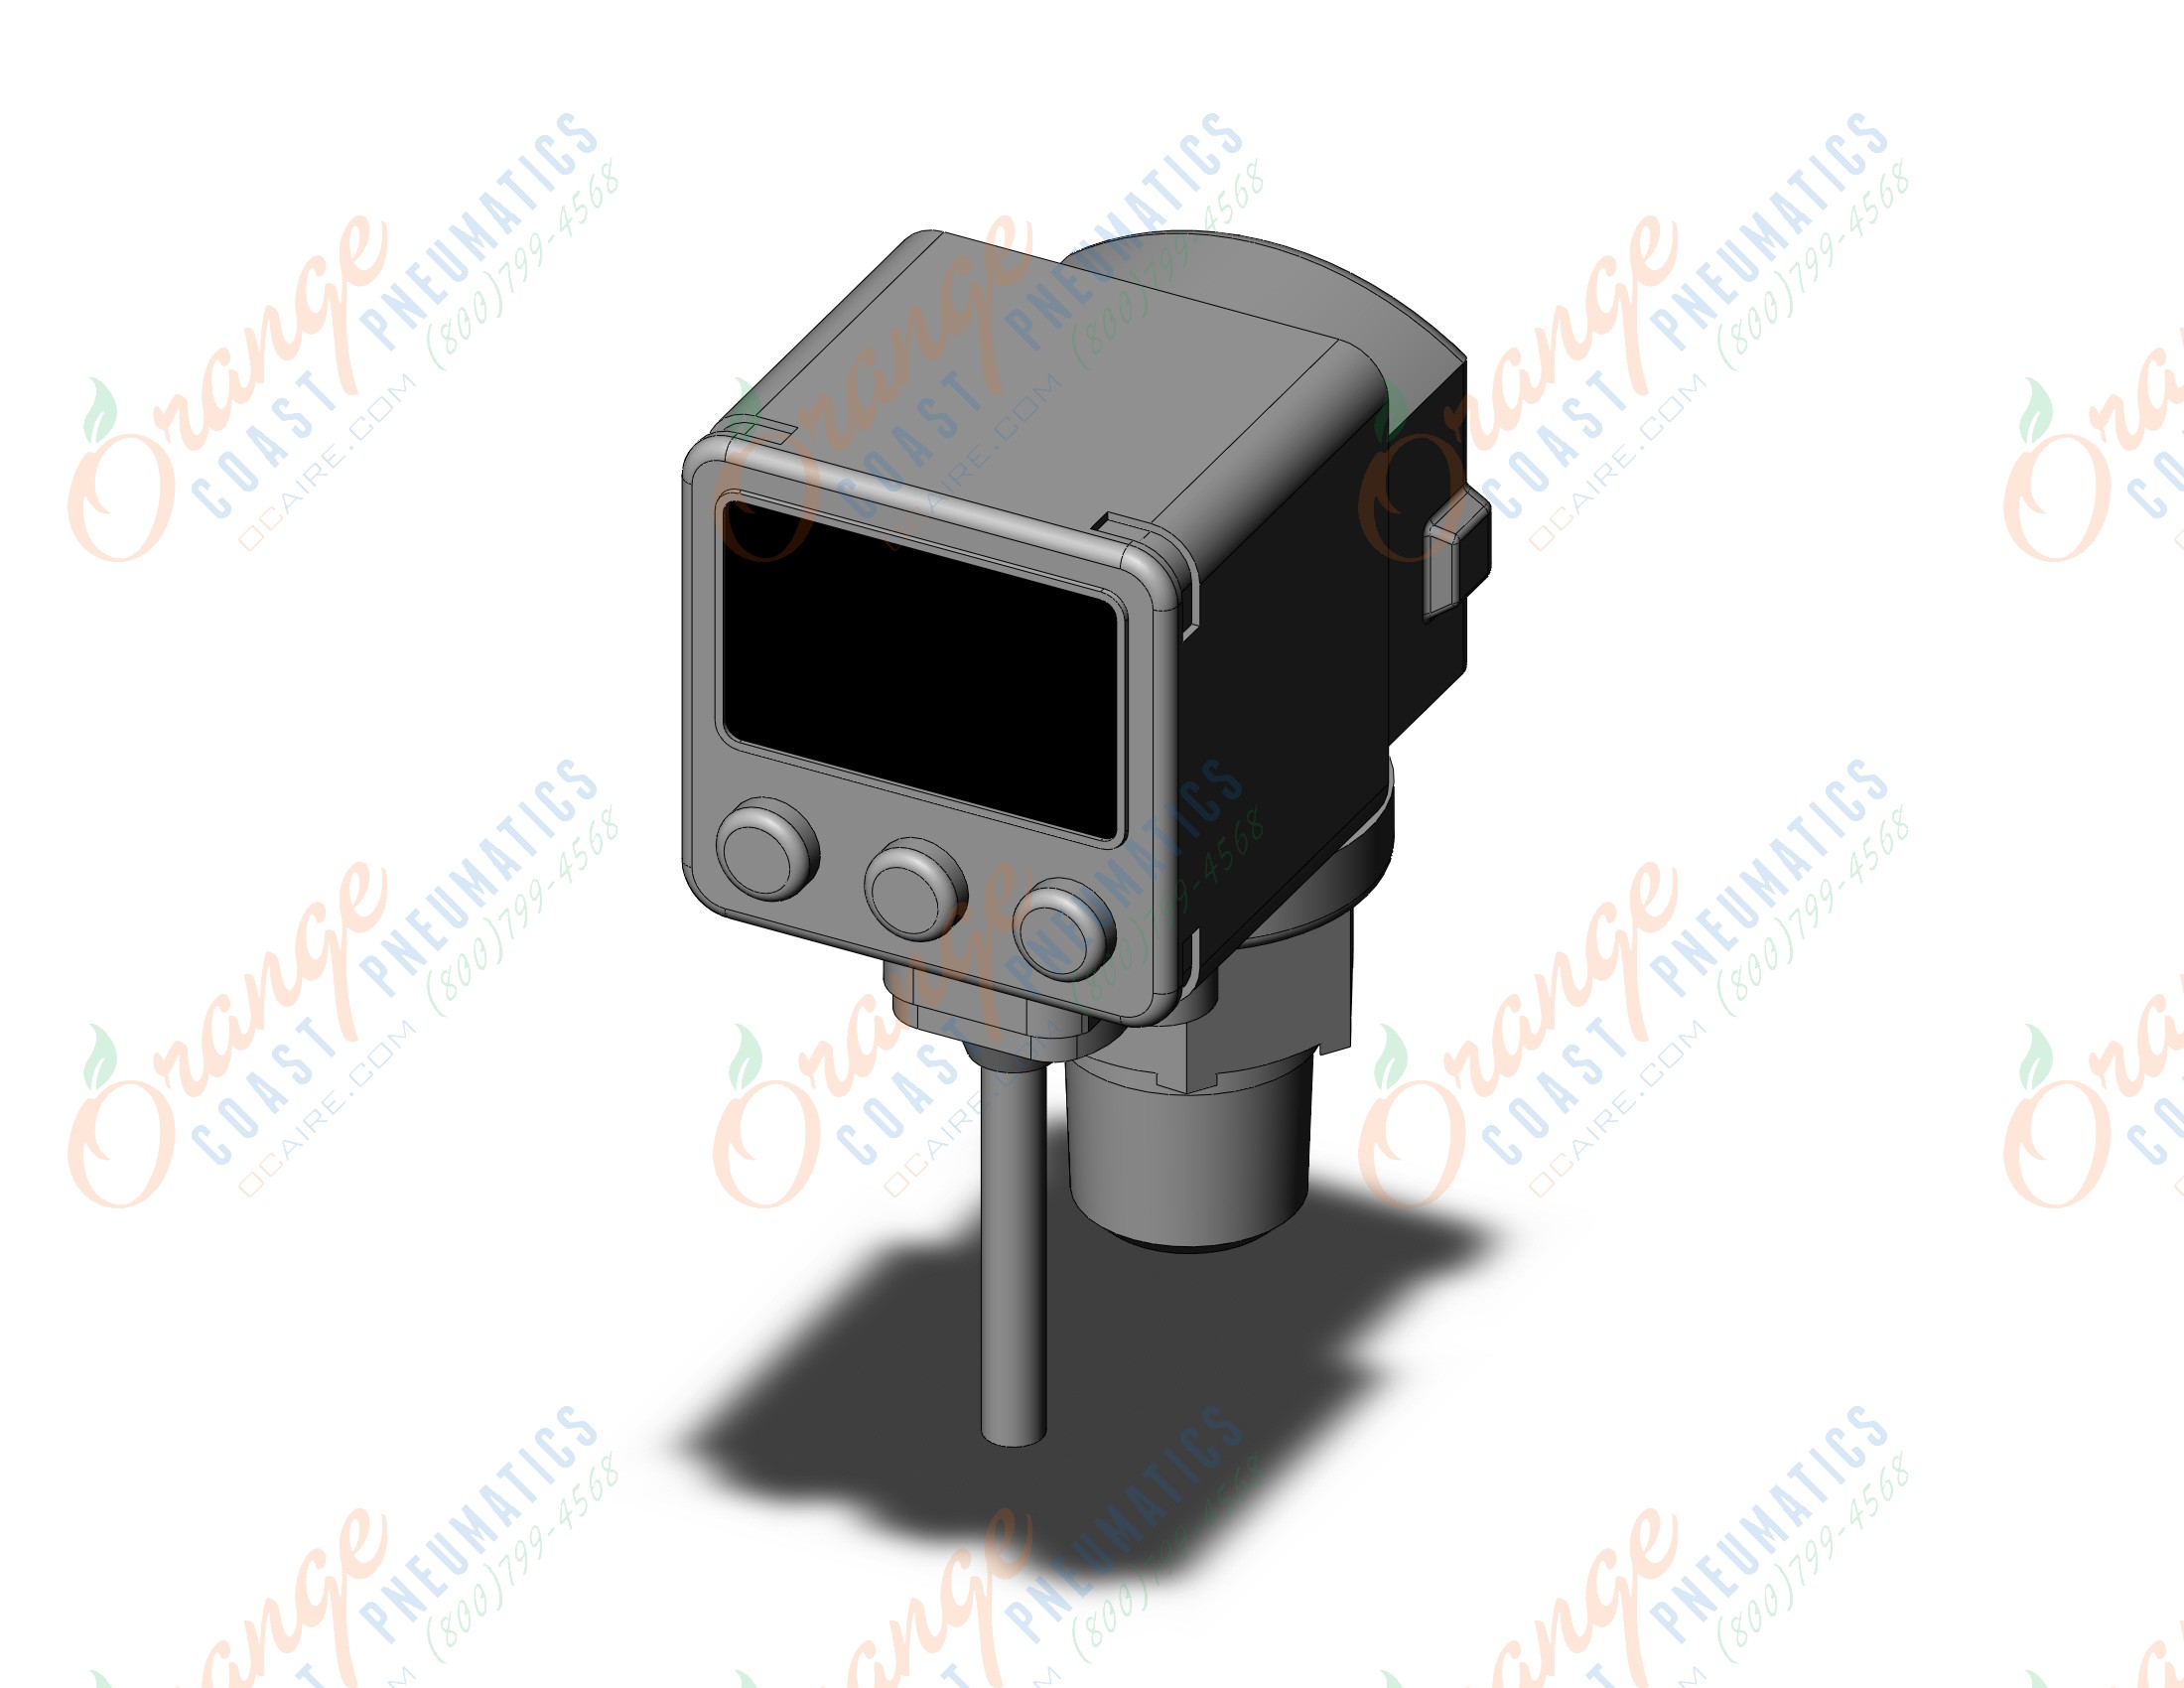 SMC ISE80-02L-B-M-X510 2-color digital press switch for fluids, PRESSURE SWITCH, ISE50-80